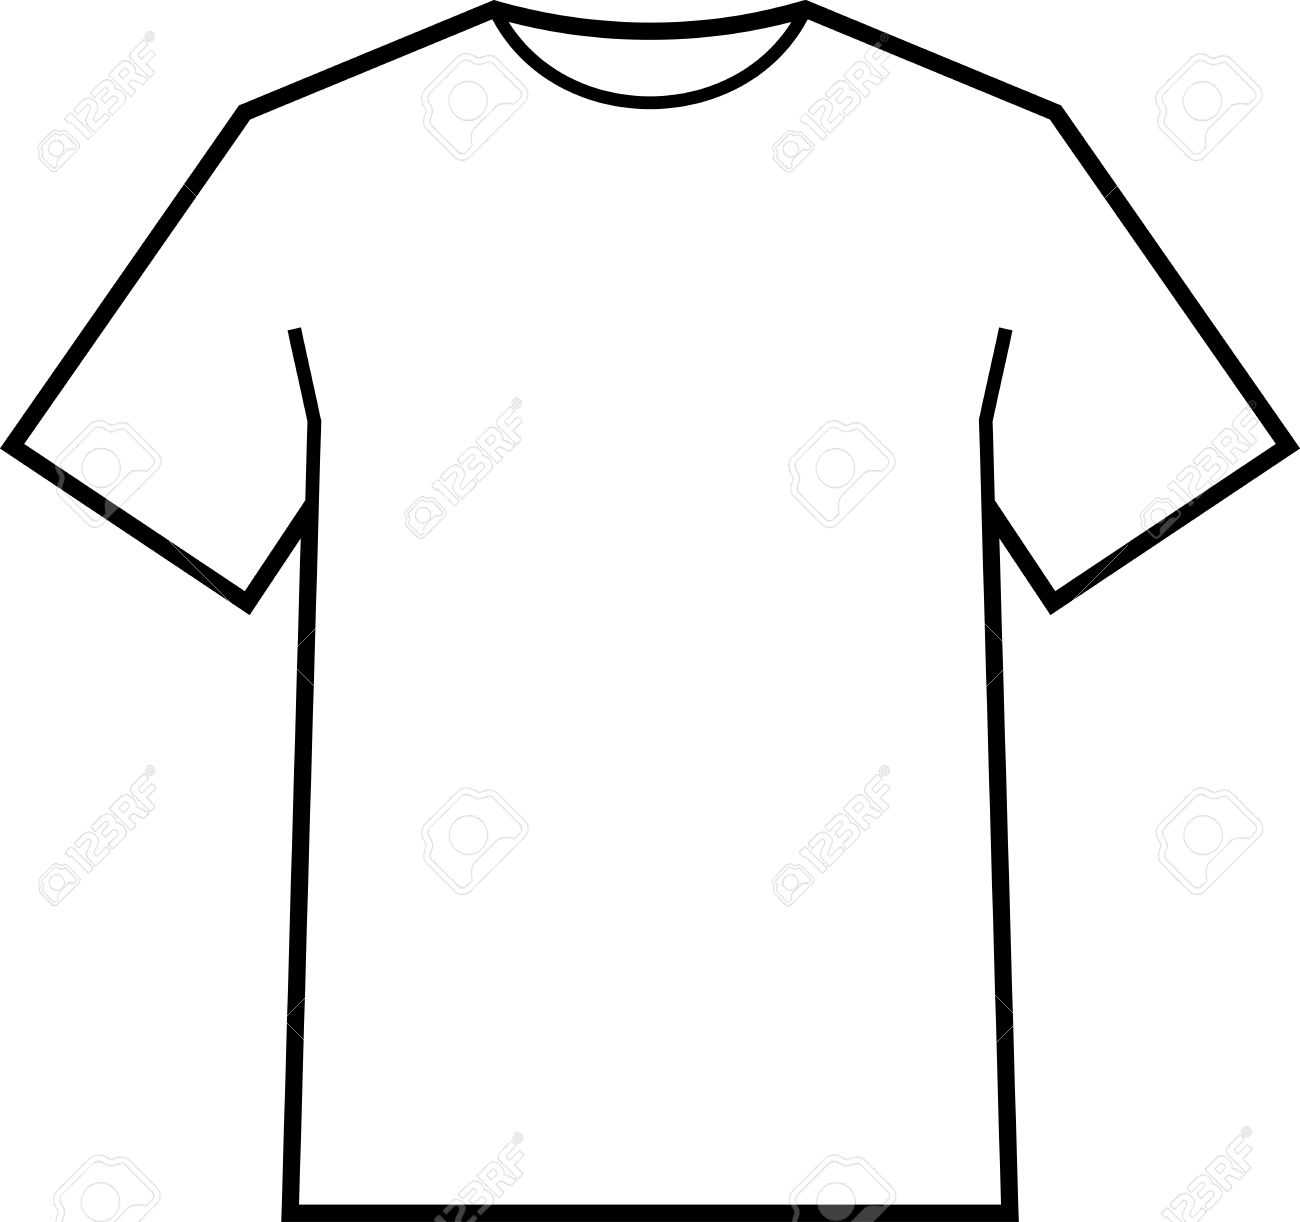 Blank Shirt Template With Regard To Blank Tshirt Template Printable